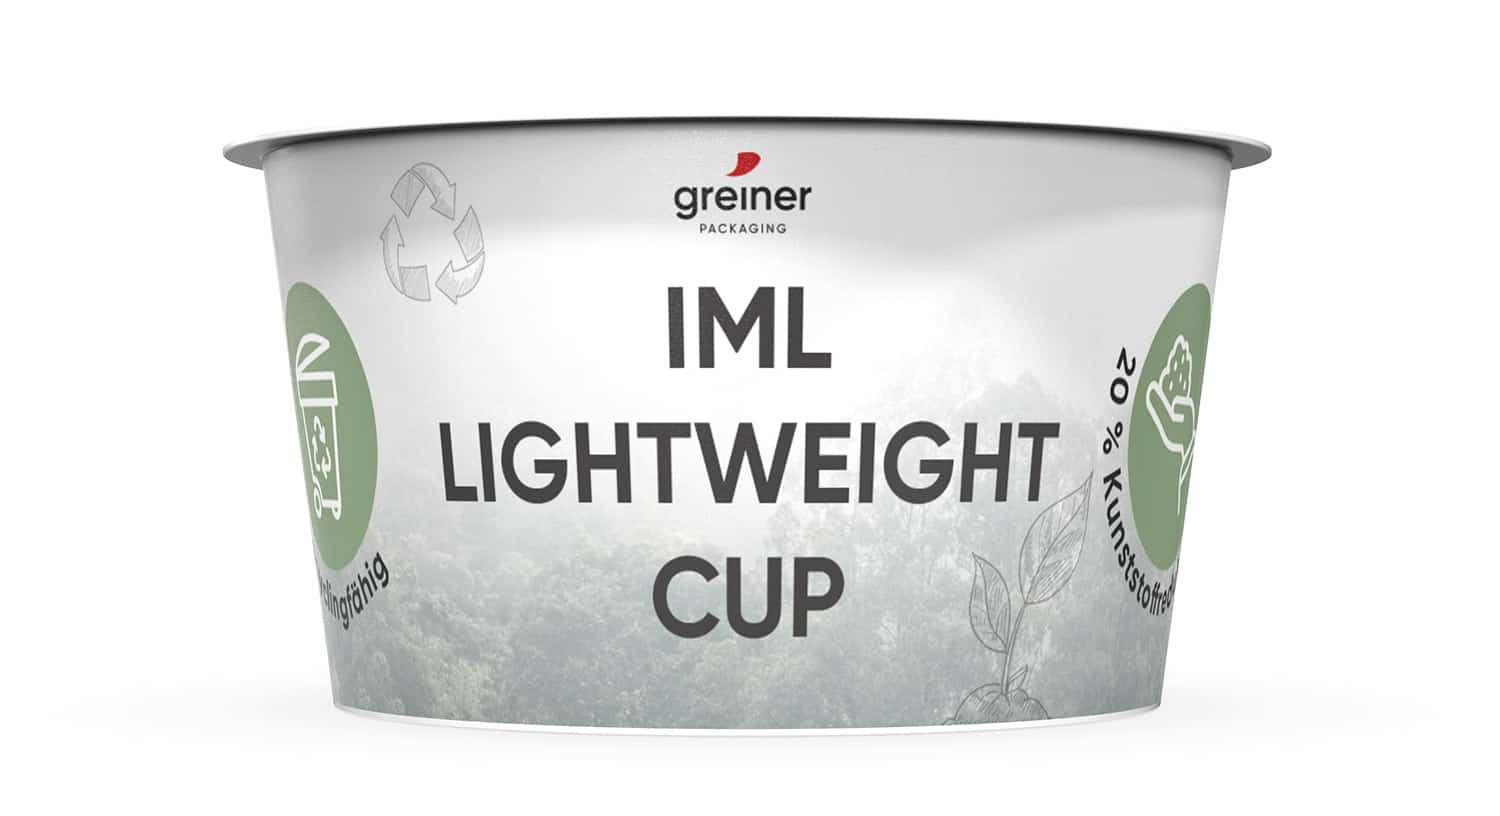 IML lightweight cup by Greiner Packaging